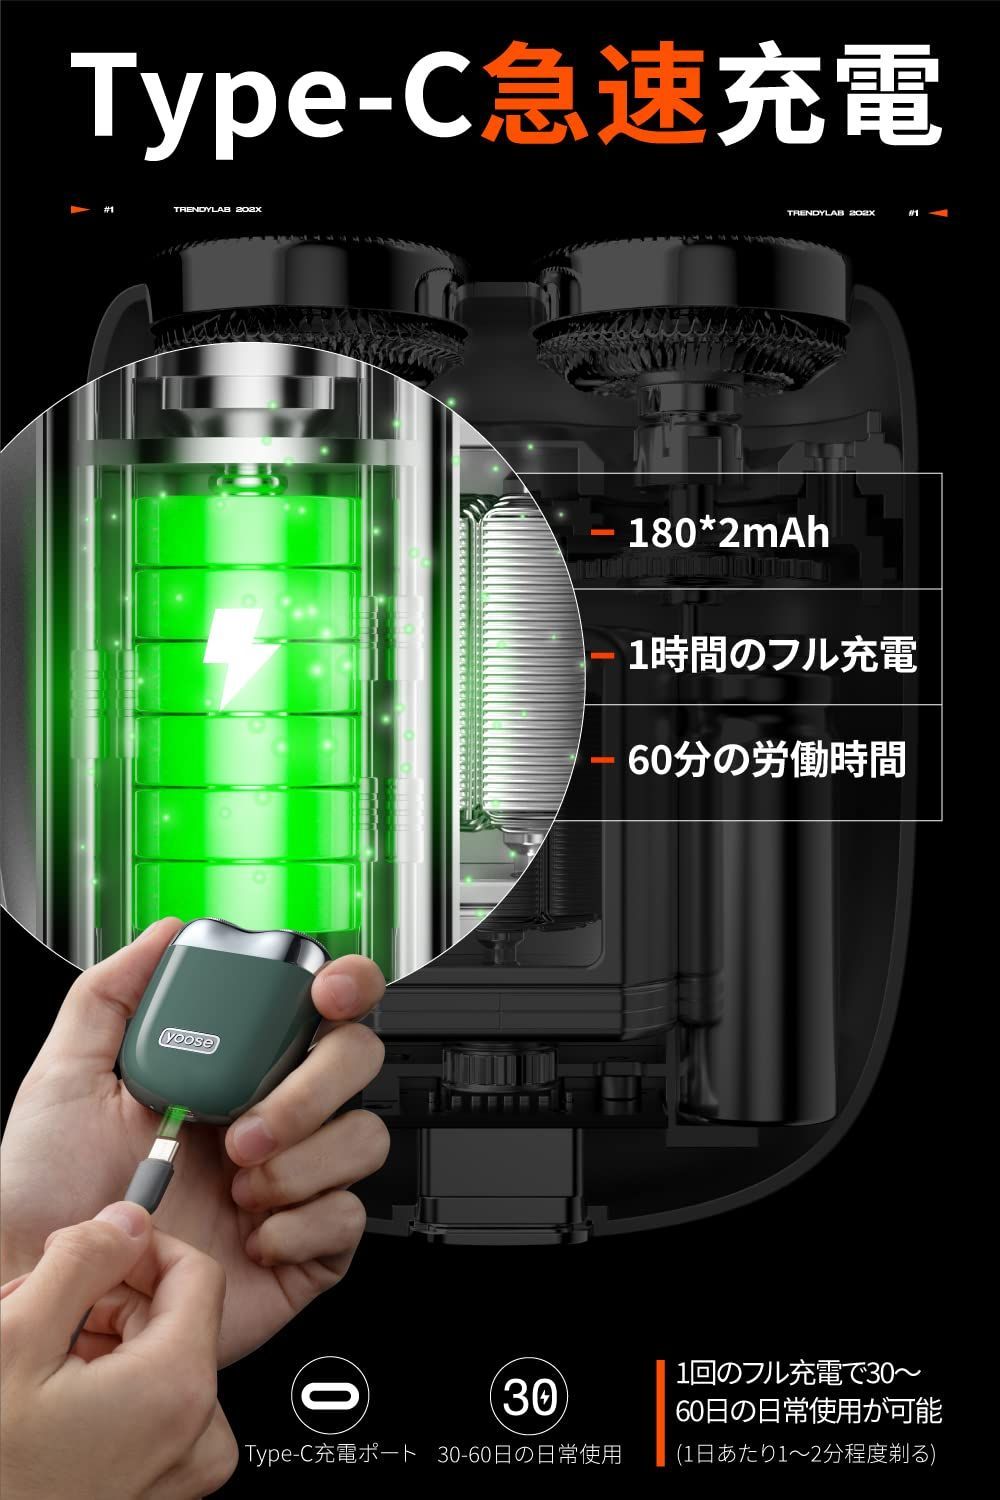 typeC 防水 IPX7 回転式 グリーン Green 充電式 miniシリーズ ...